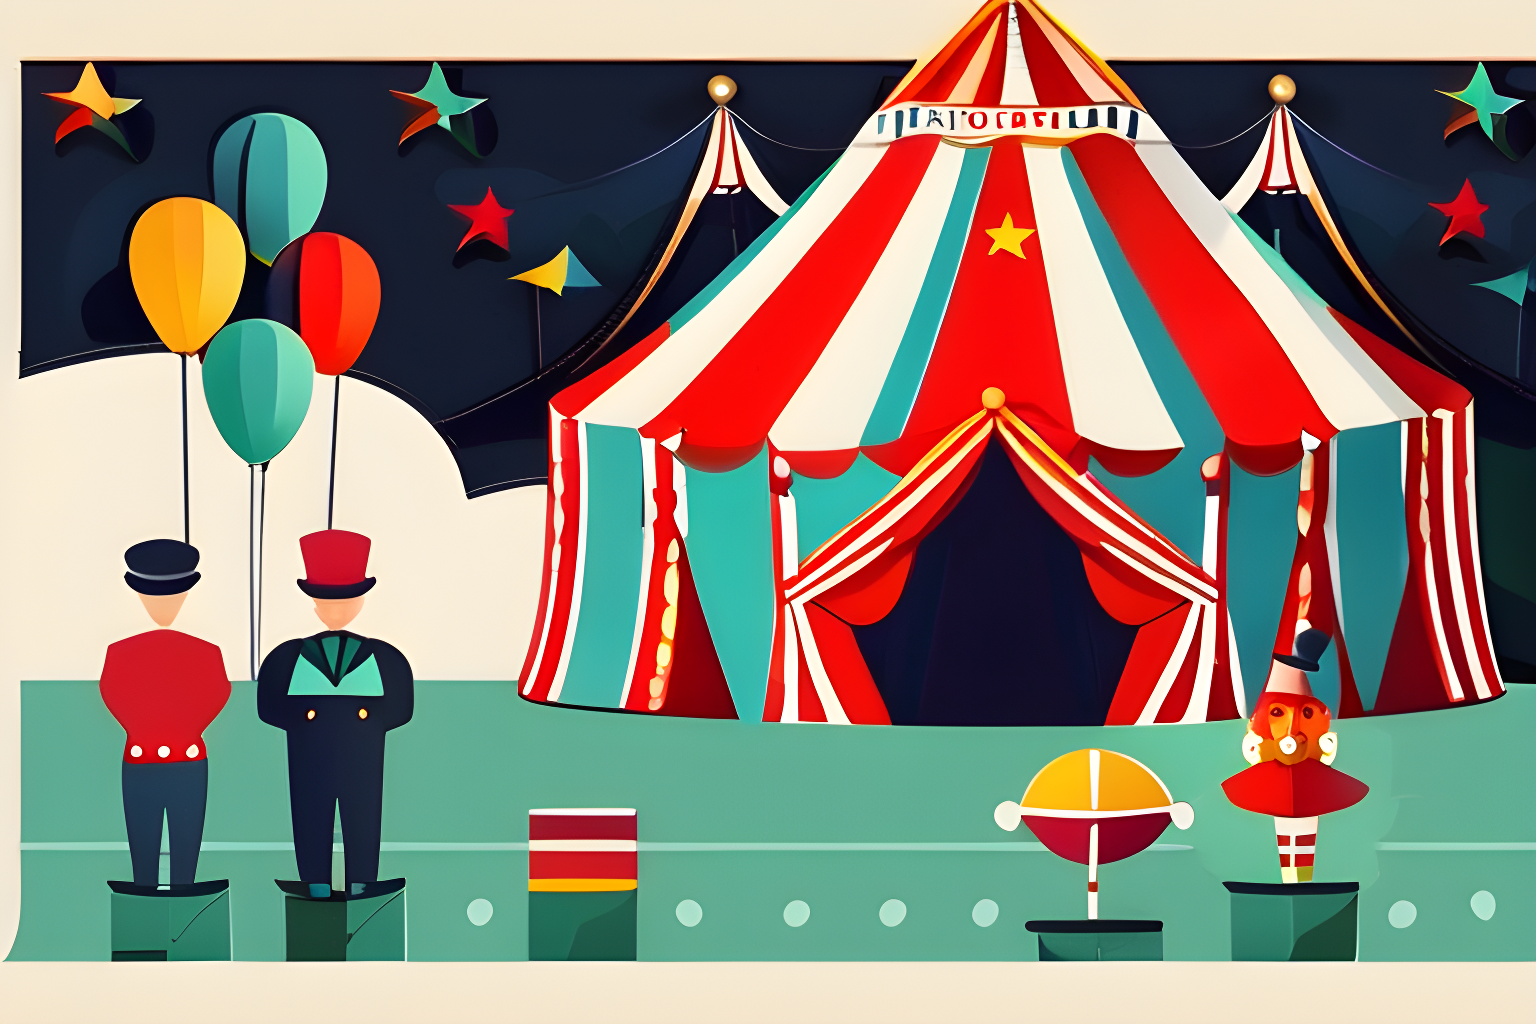 illustrate a circus